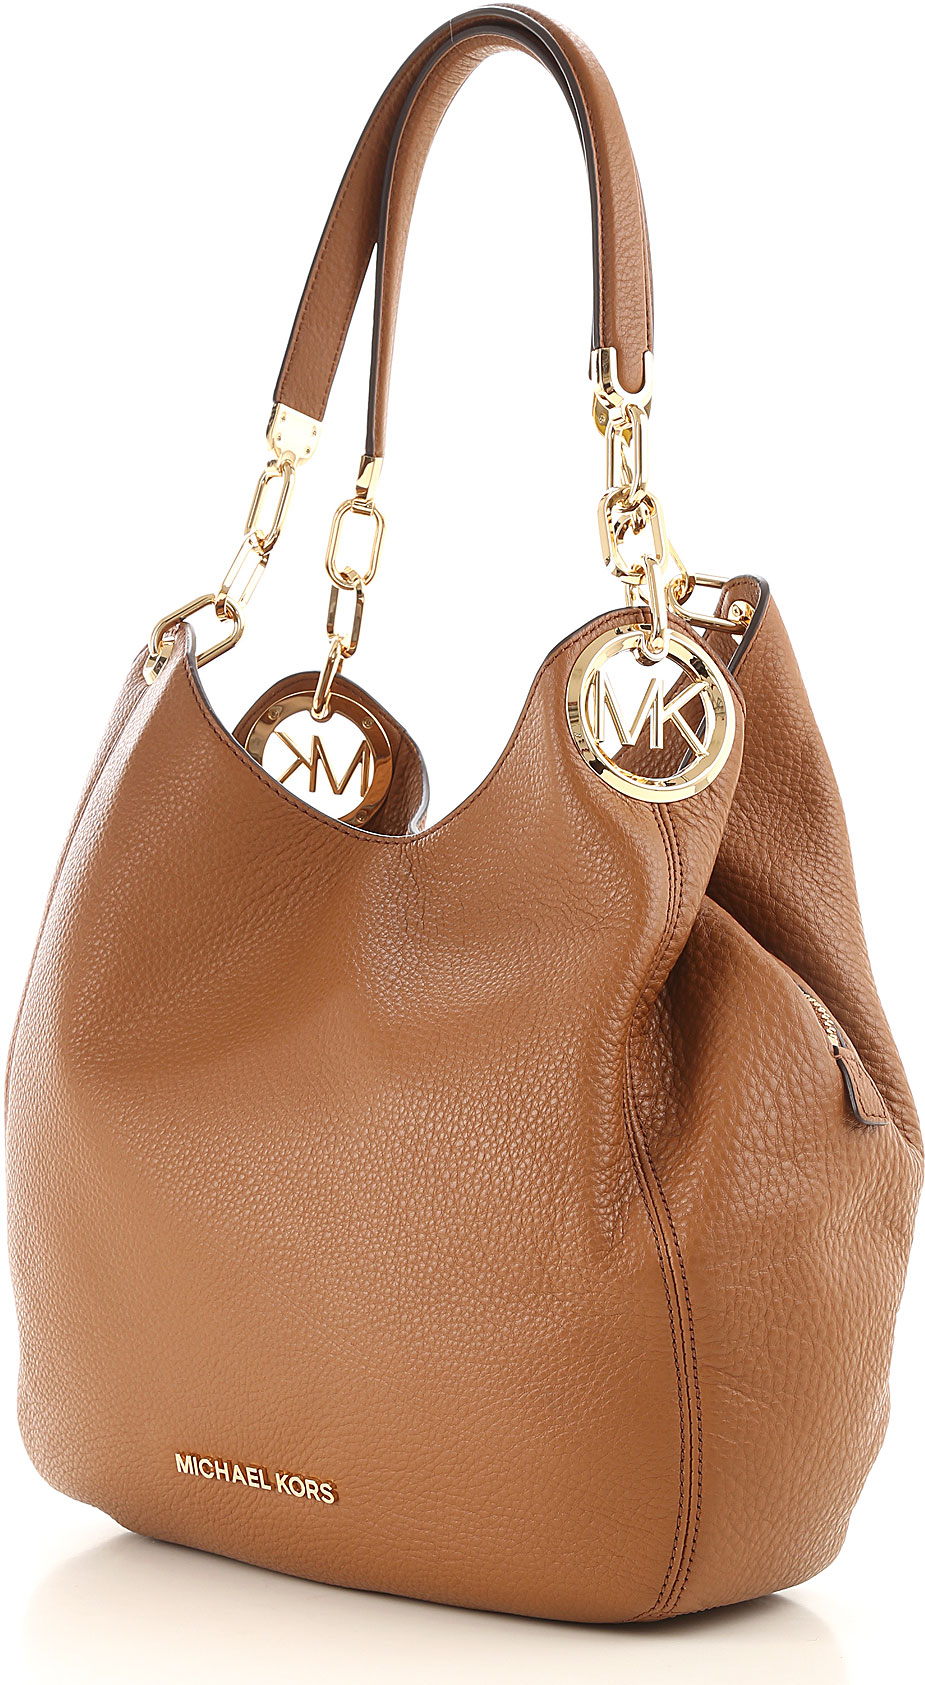 Handbags Michael Kors, Style code: 30t9g0le3l-230-B464